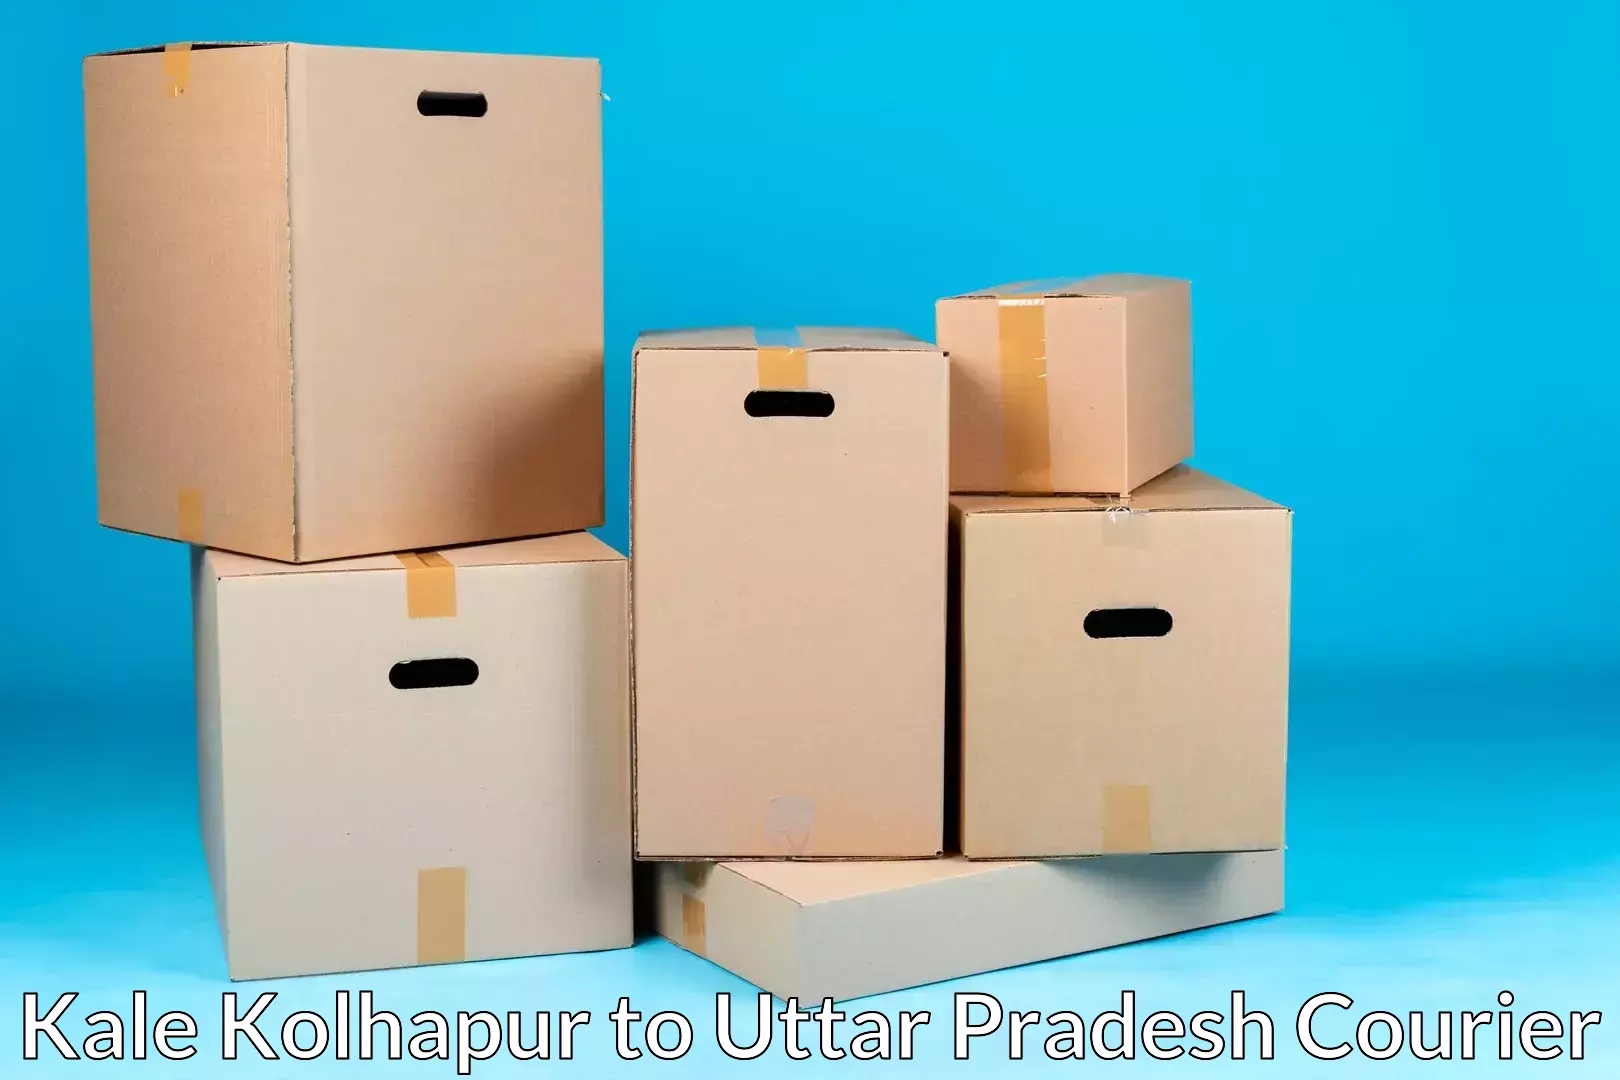 Furniture delivery service Kale Kolhapur to Amity University Gautam Budh Nagar